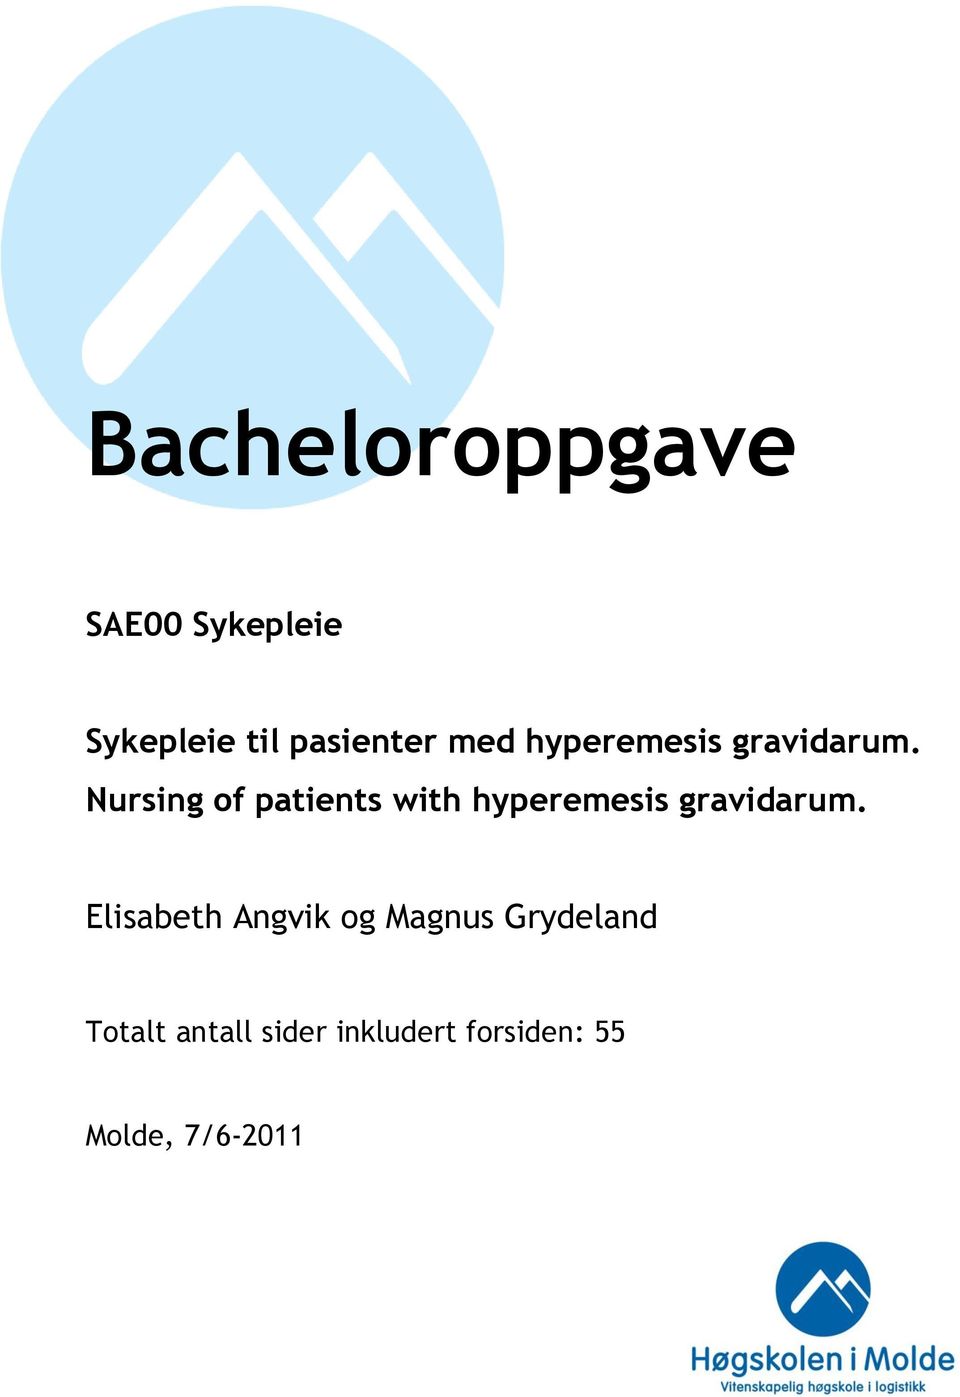 Nursing of patients with hyperemesis gravidarum.